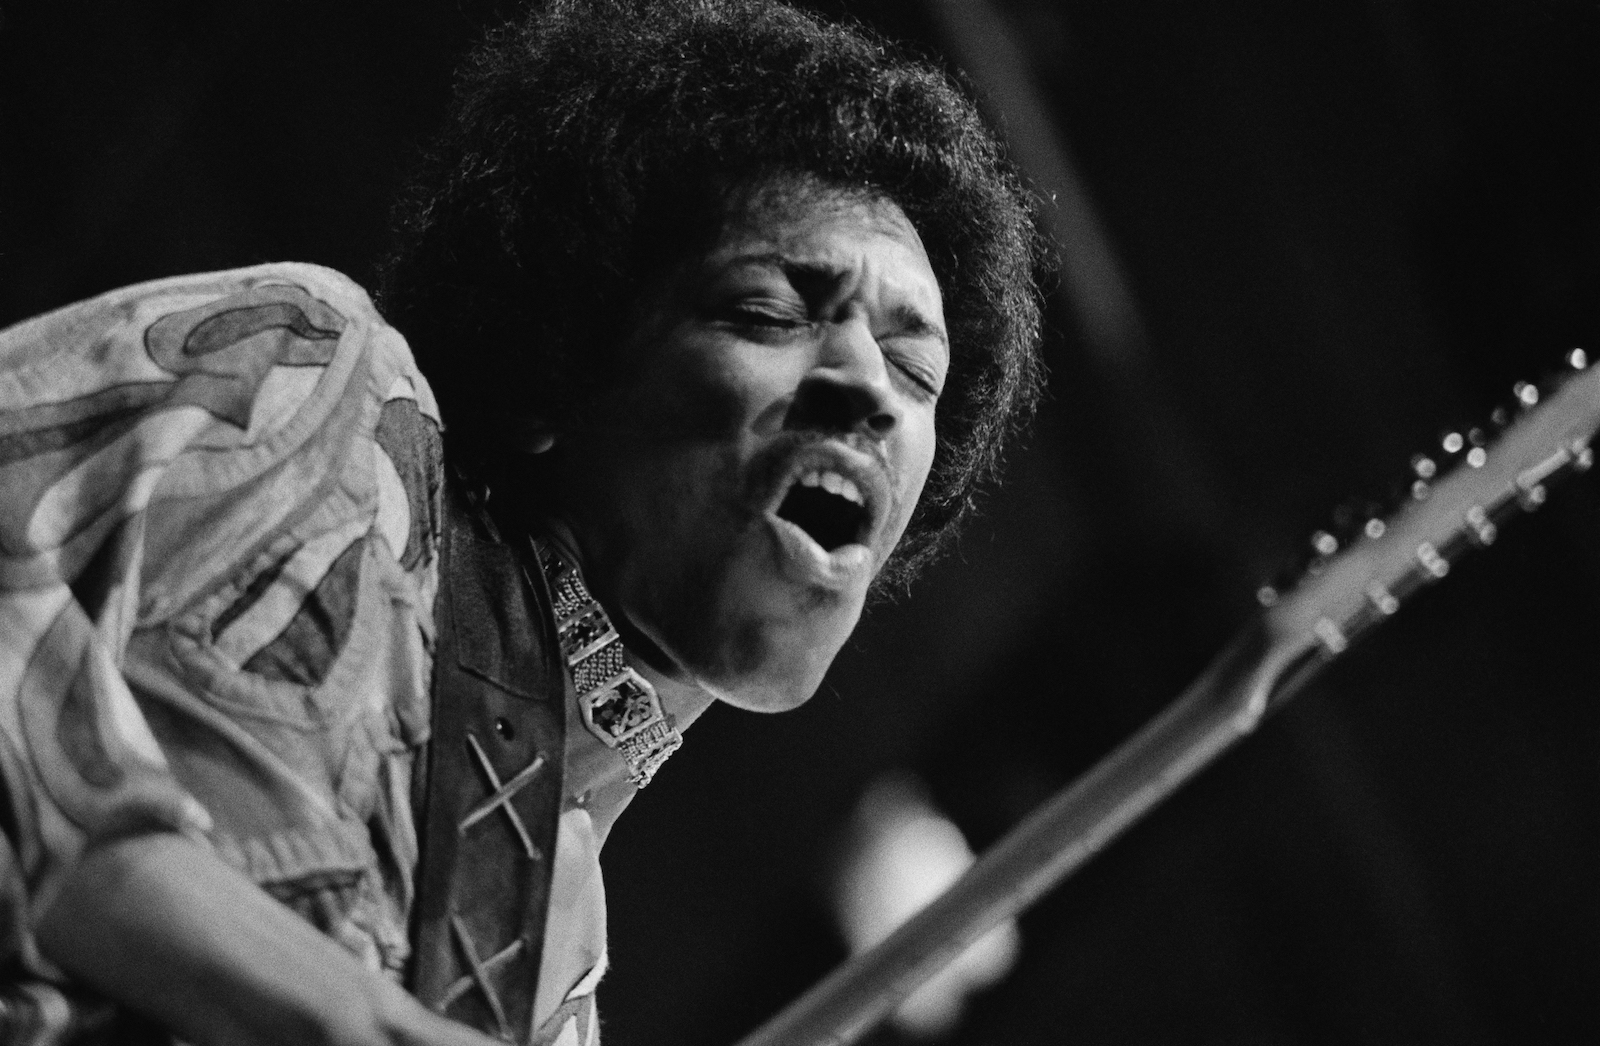 Jimi Hendrix playing his electric guitar